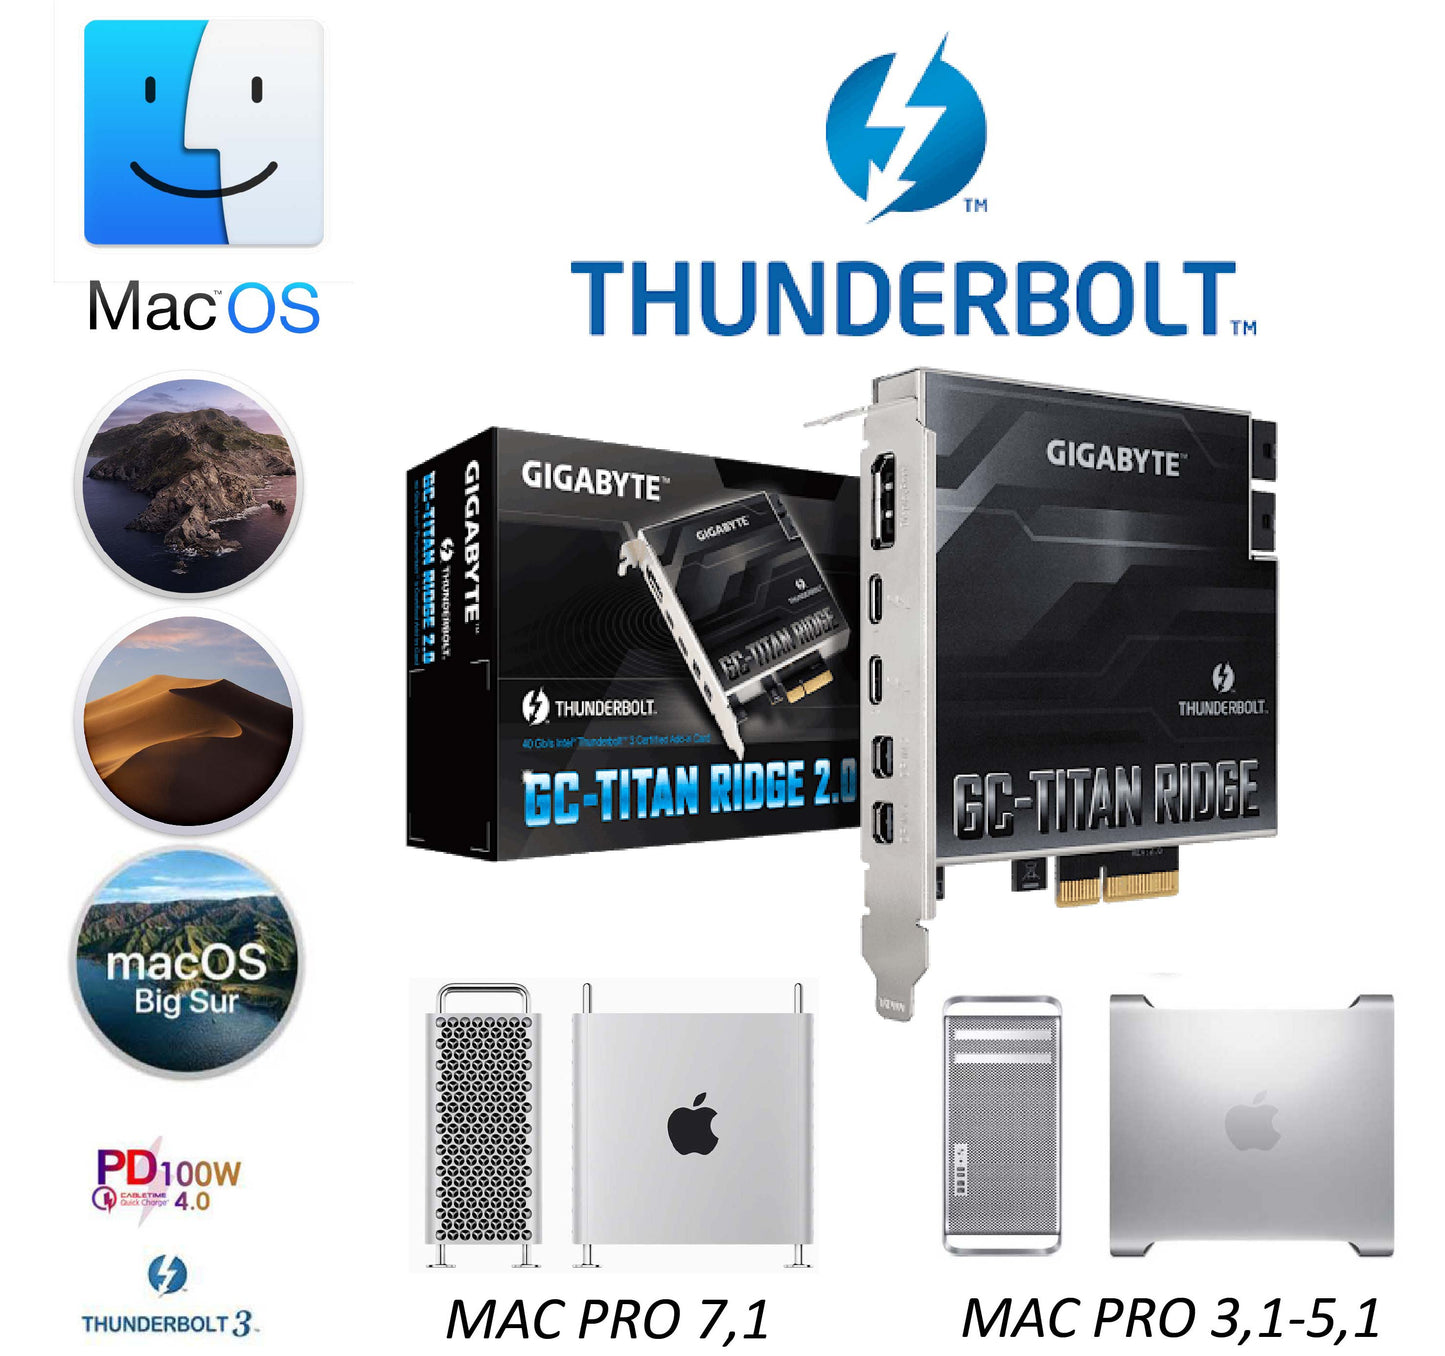 Gigabyte Titan Ridge 2.0 Thunderbolt 3 Flashed For Mac Pro 4,1 5,1 USB C 3.2